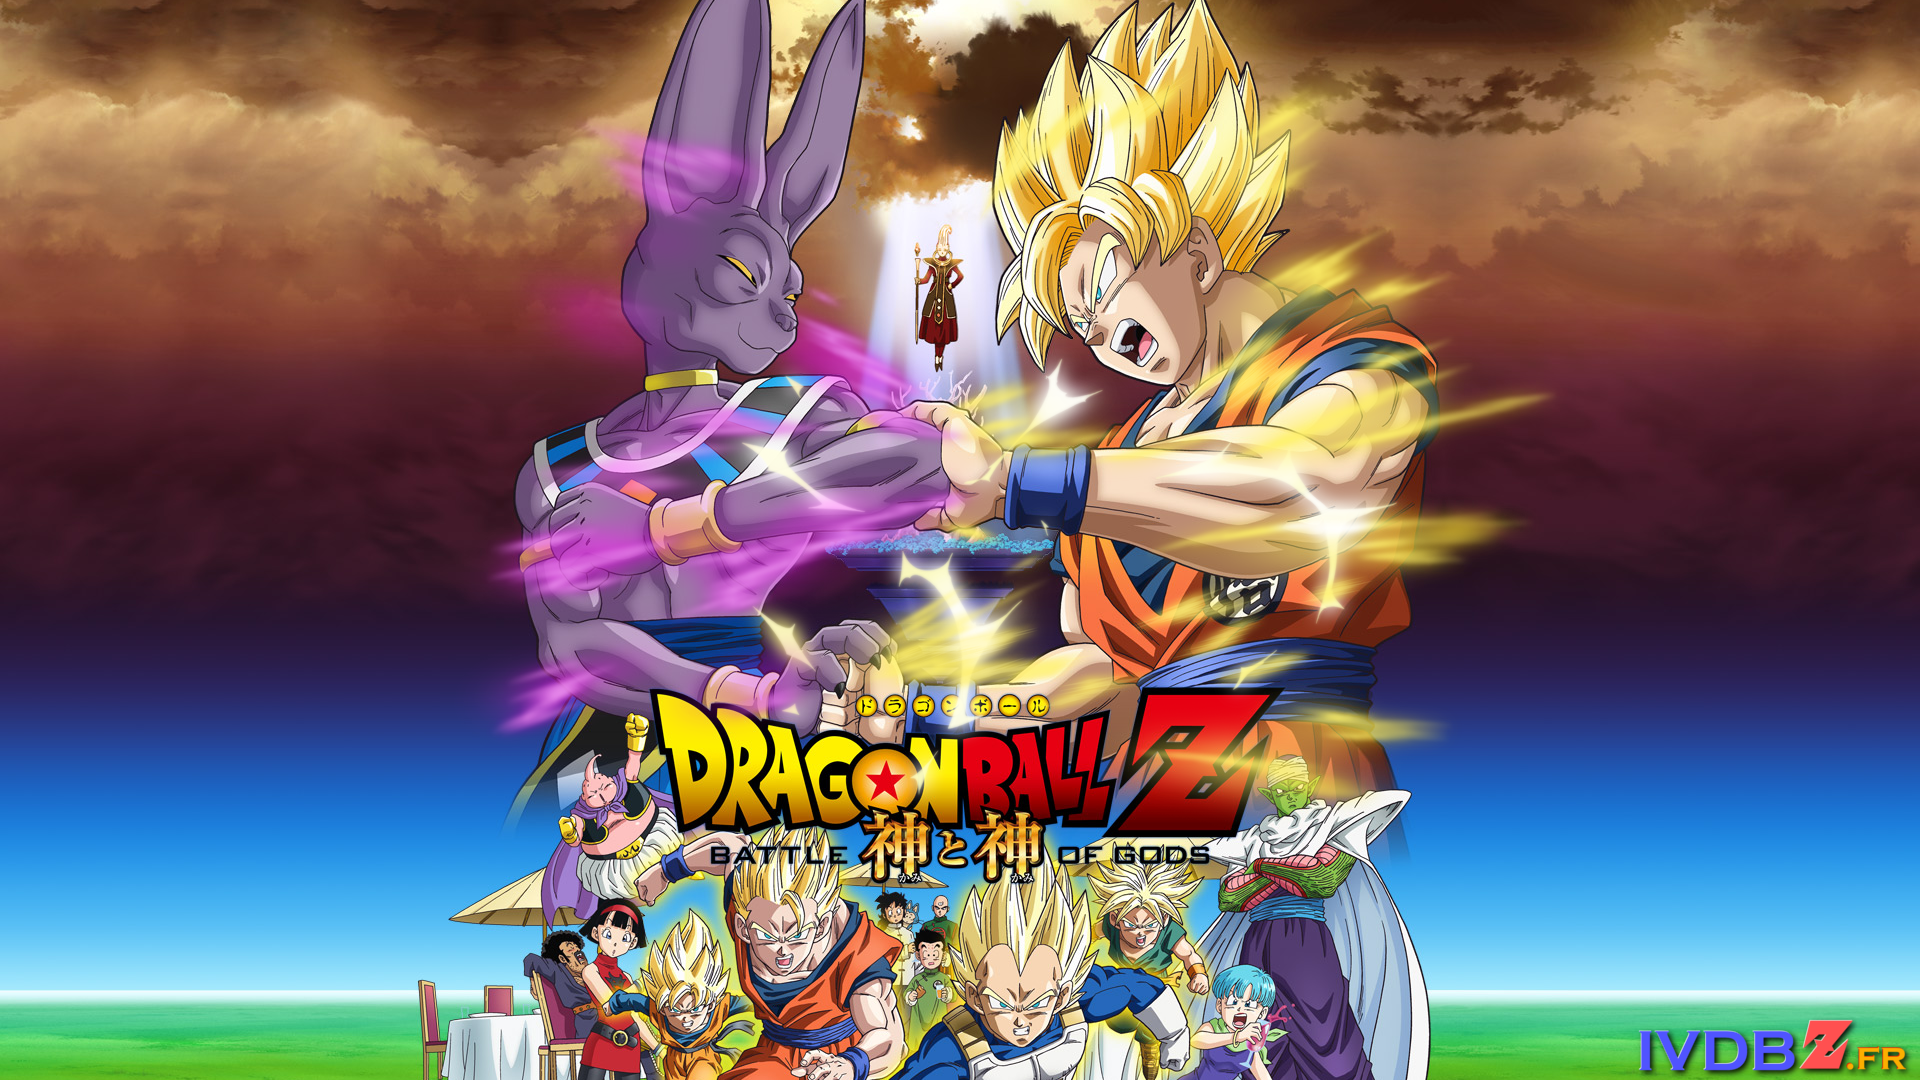 Dragon Ball Z Battle Of Gods HD Wallpaper Background Image